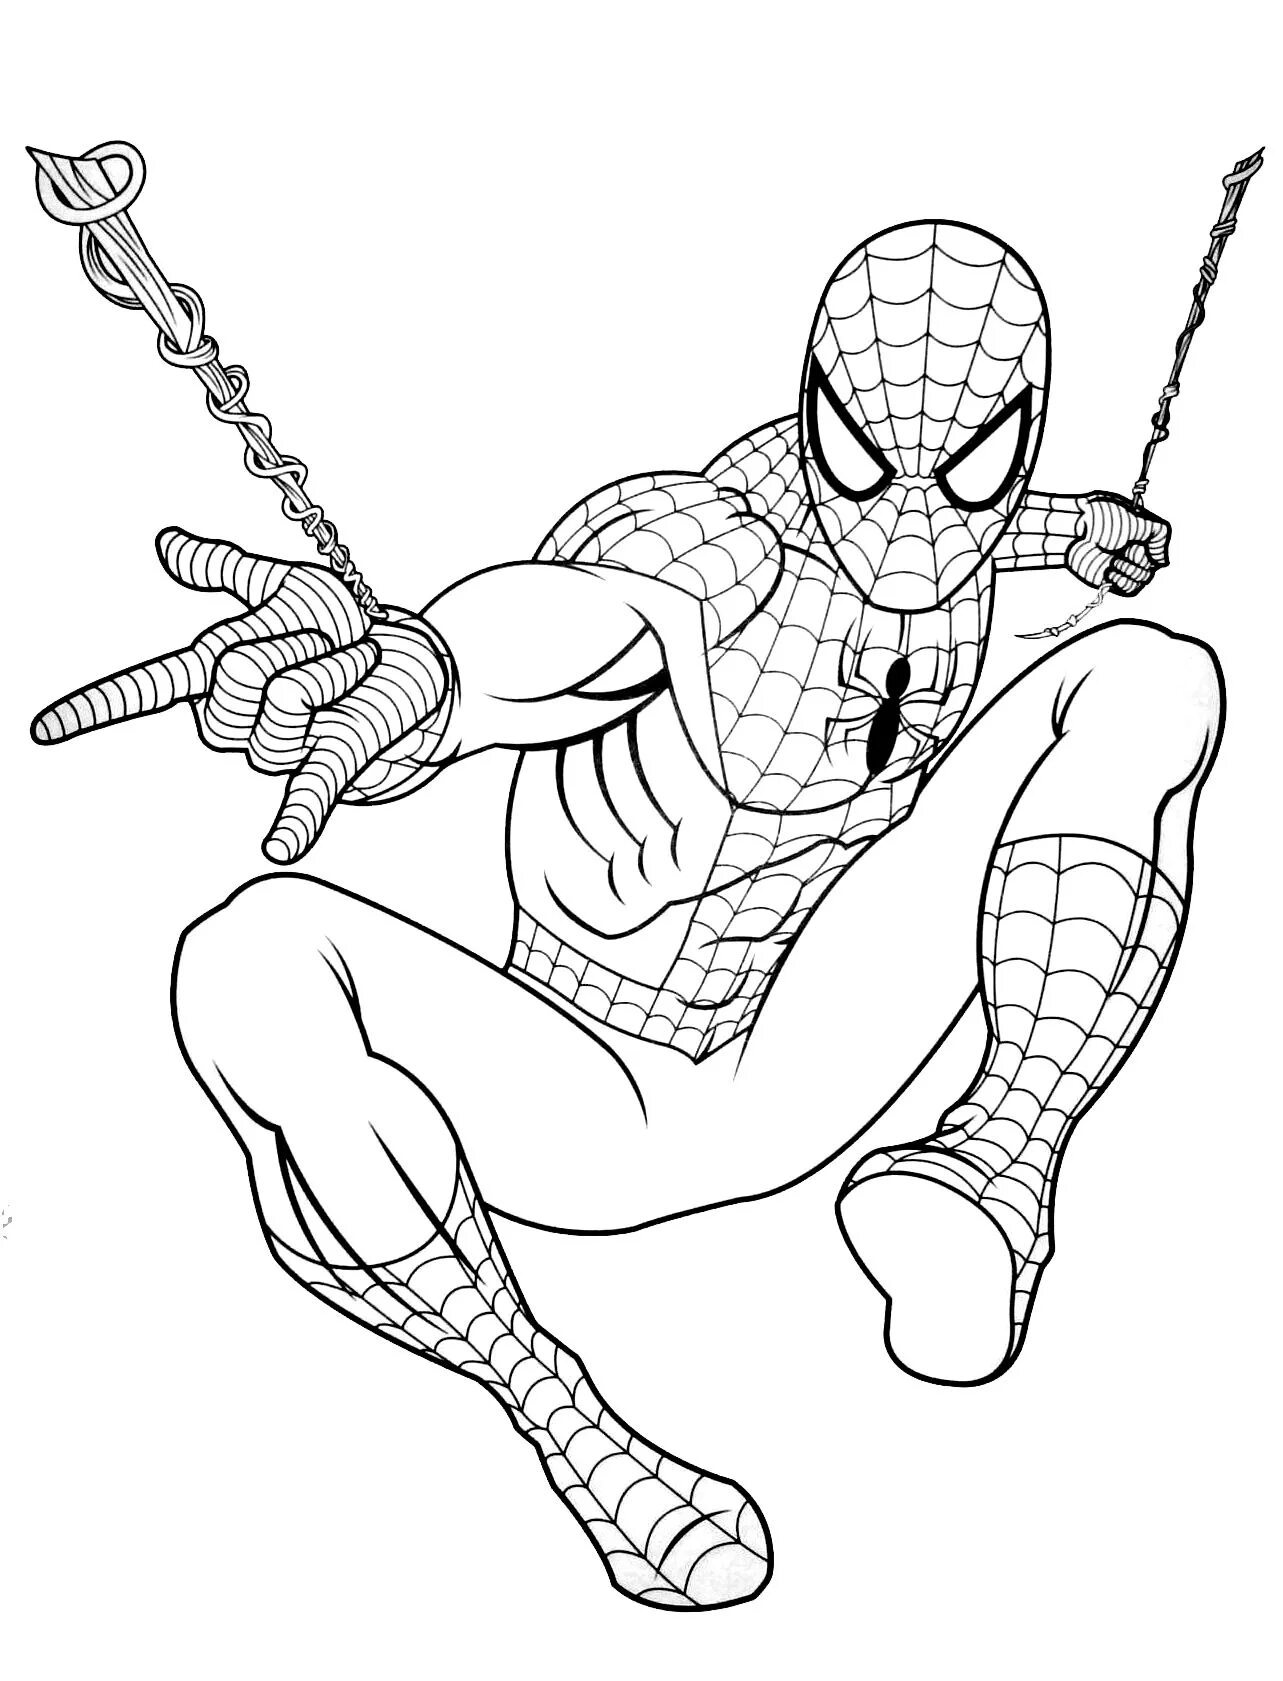 Spiderman's fun anti-stress coloring book